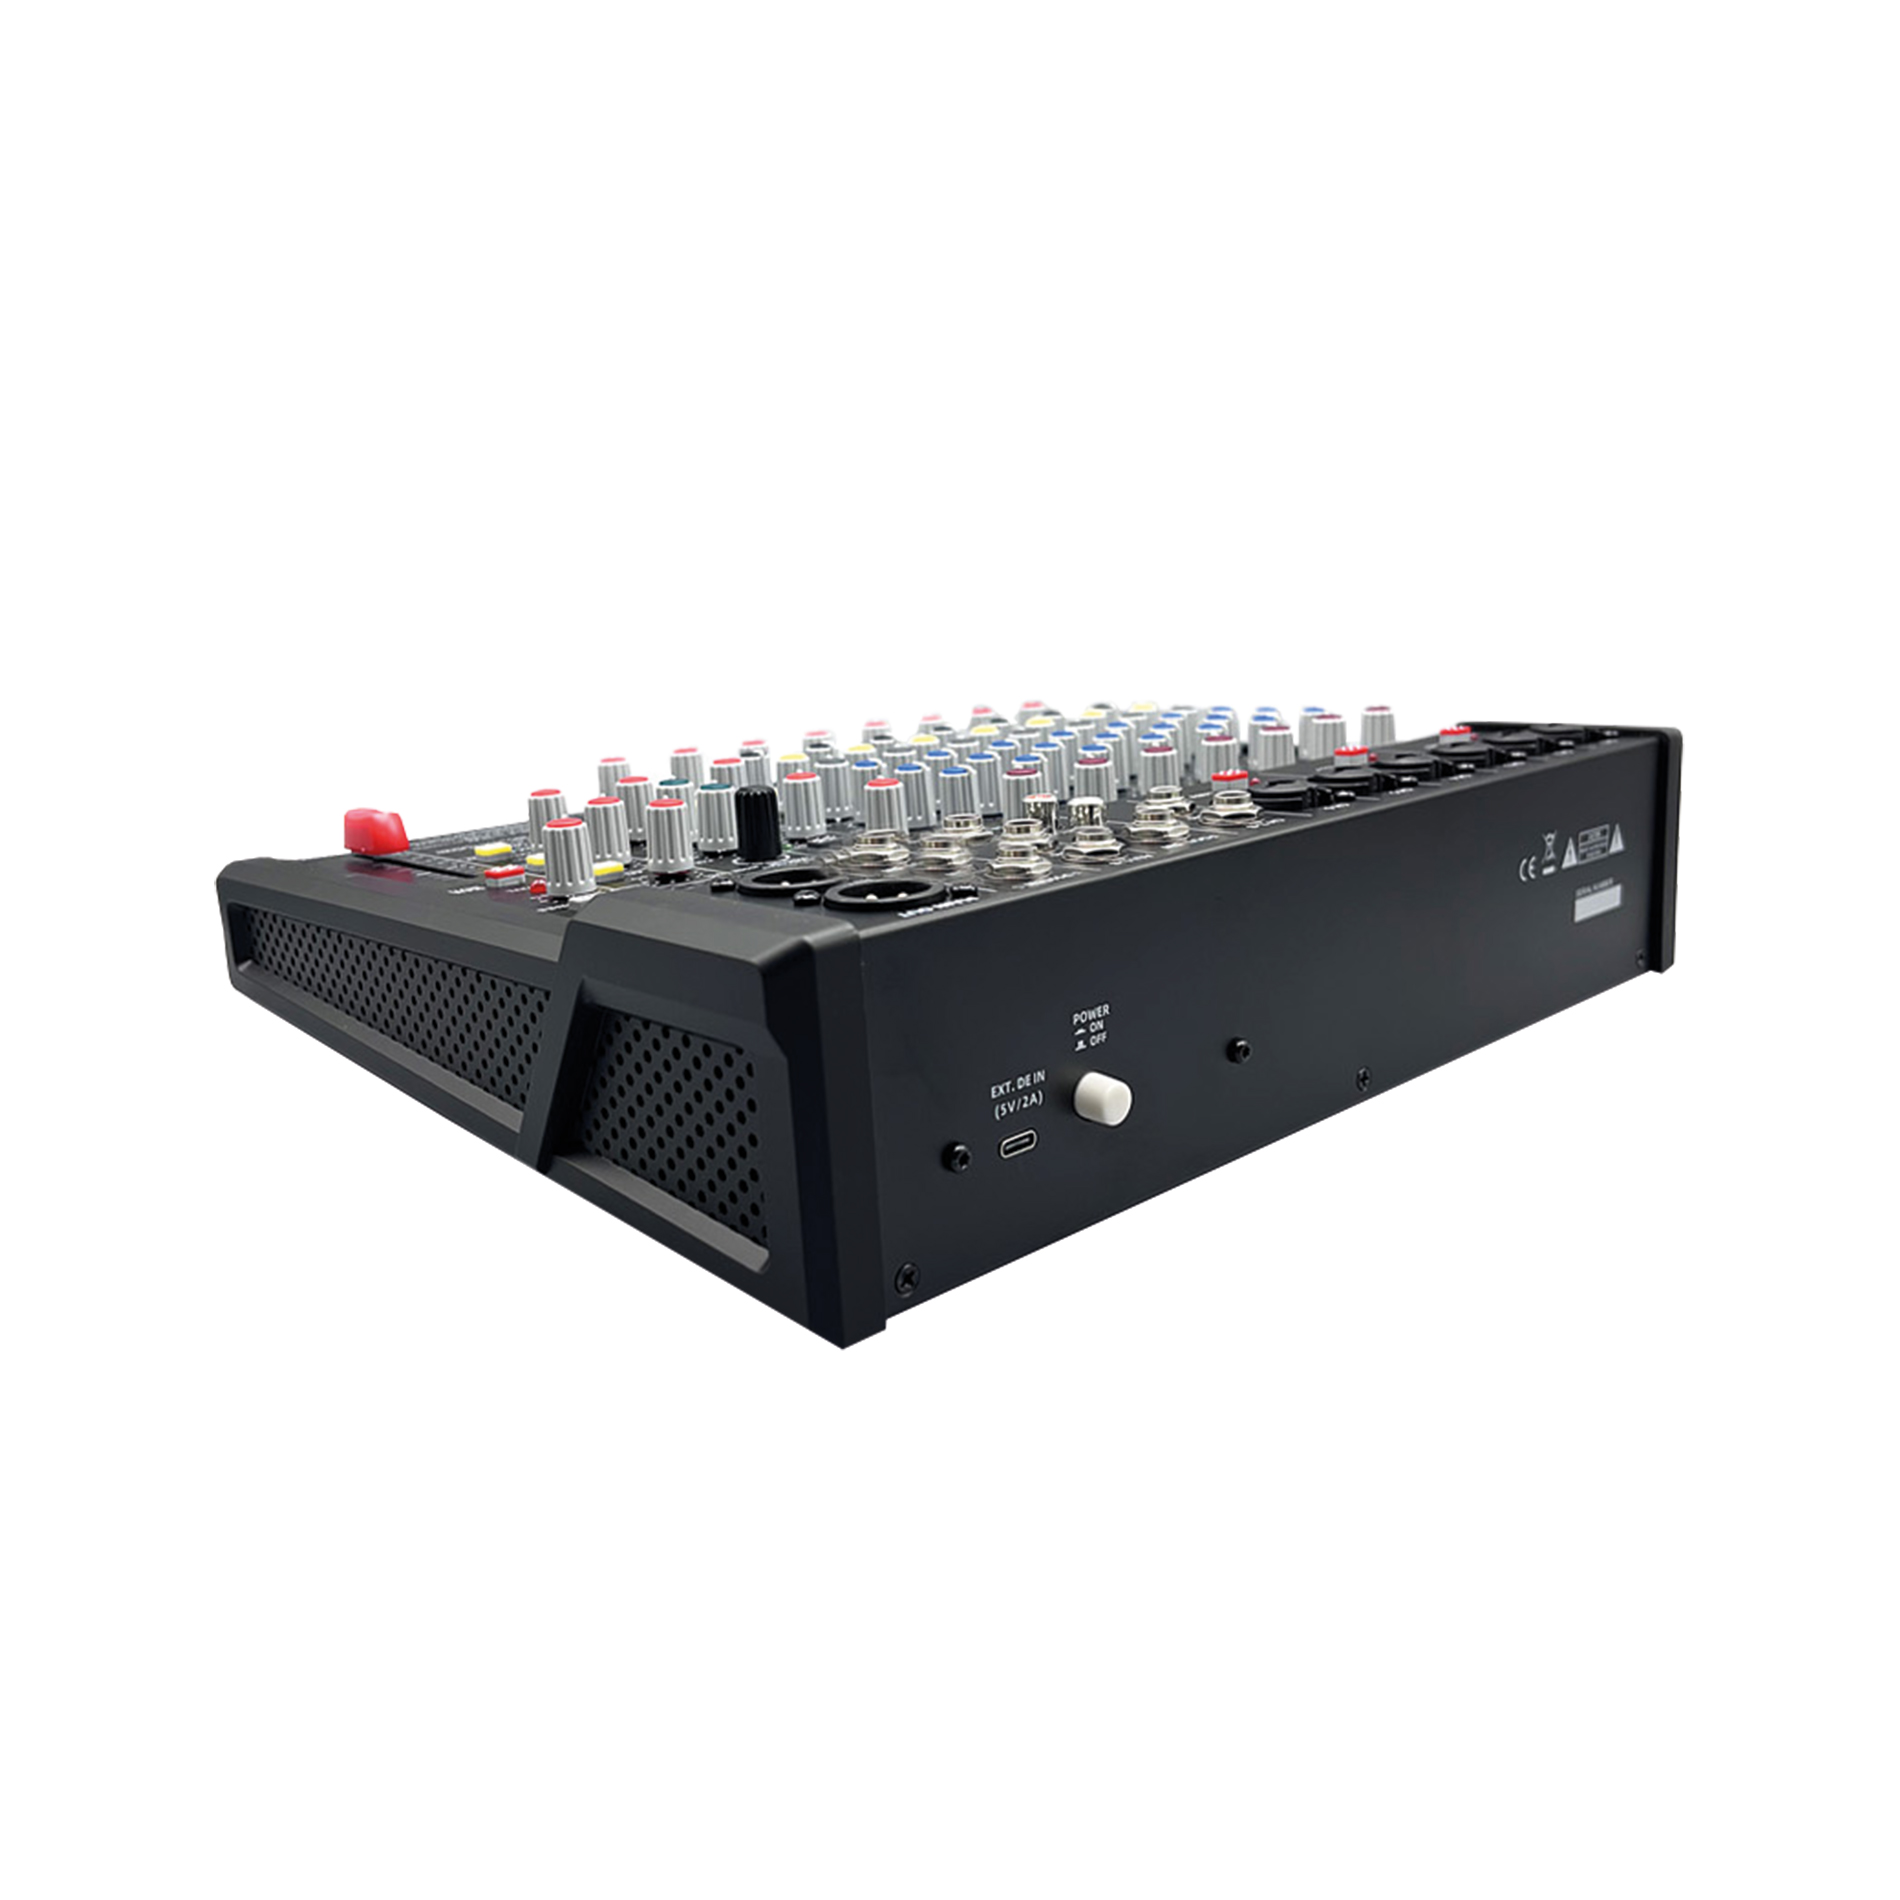 Definitive Audio Tm 633 Bu-dsp - Mesa de mezcla analógica - Variation 4